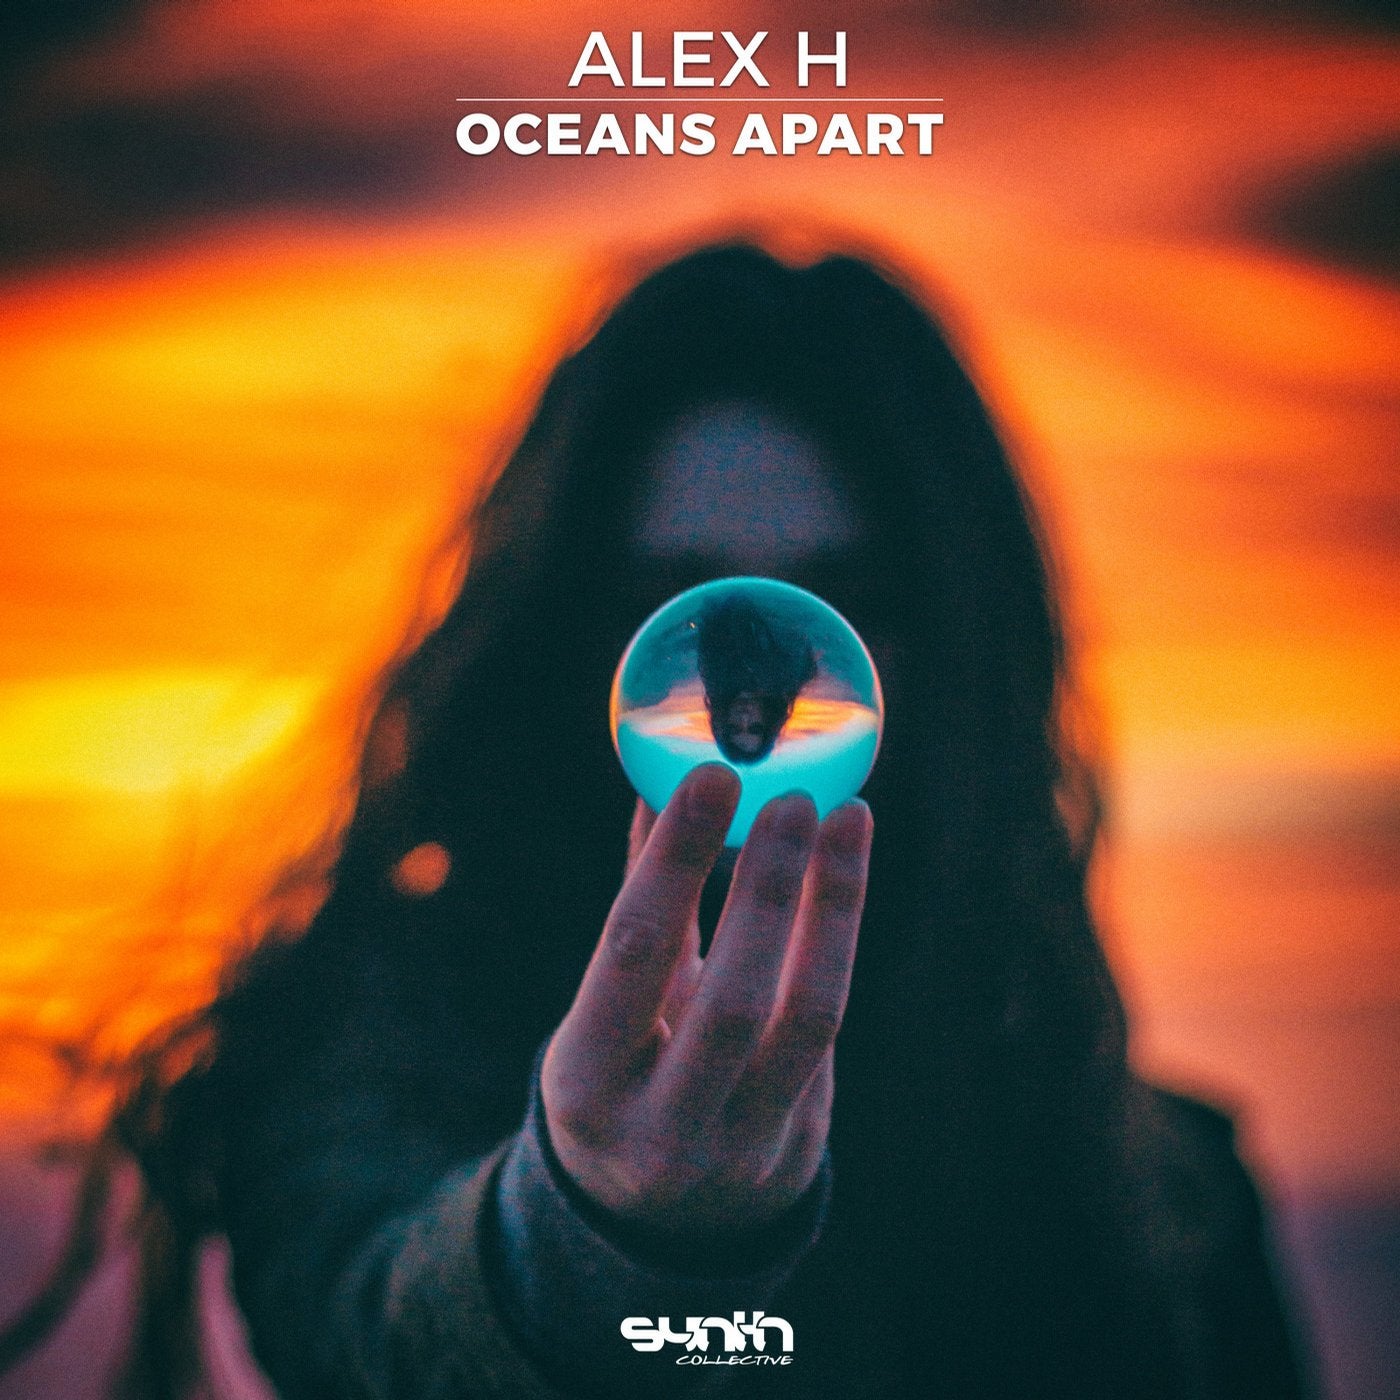 Oceans Apart - Real Music